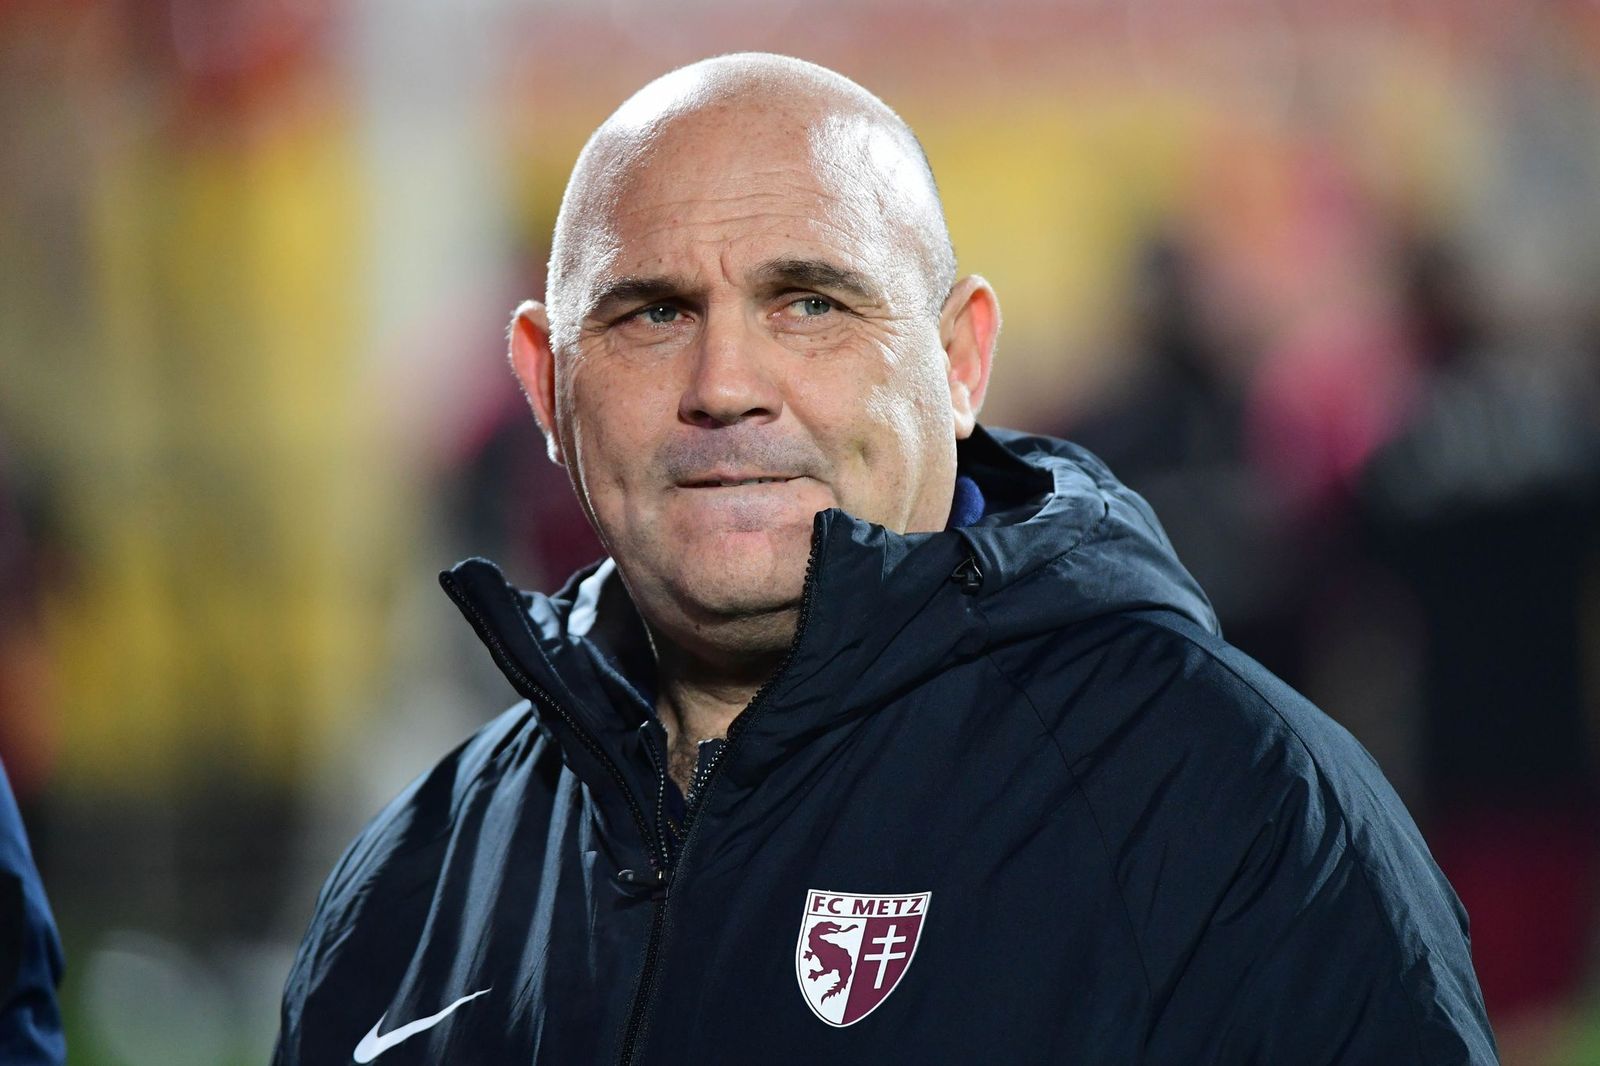 Le manager de football Frédéric Antonetti | Photo : Getty Images